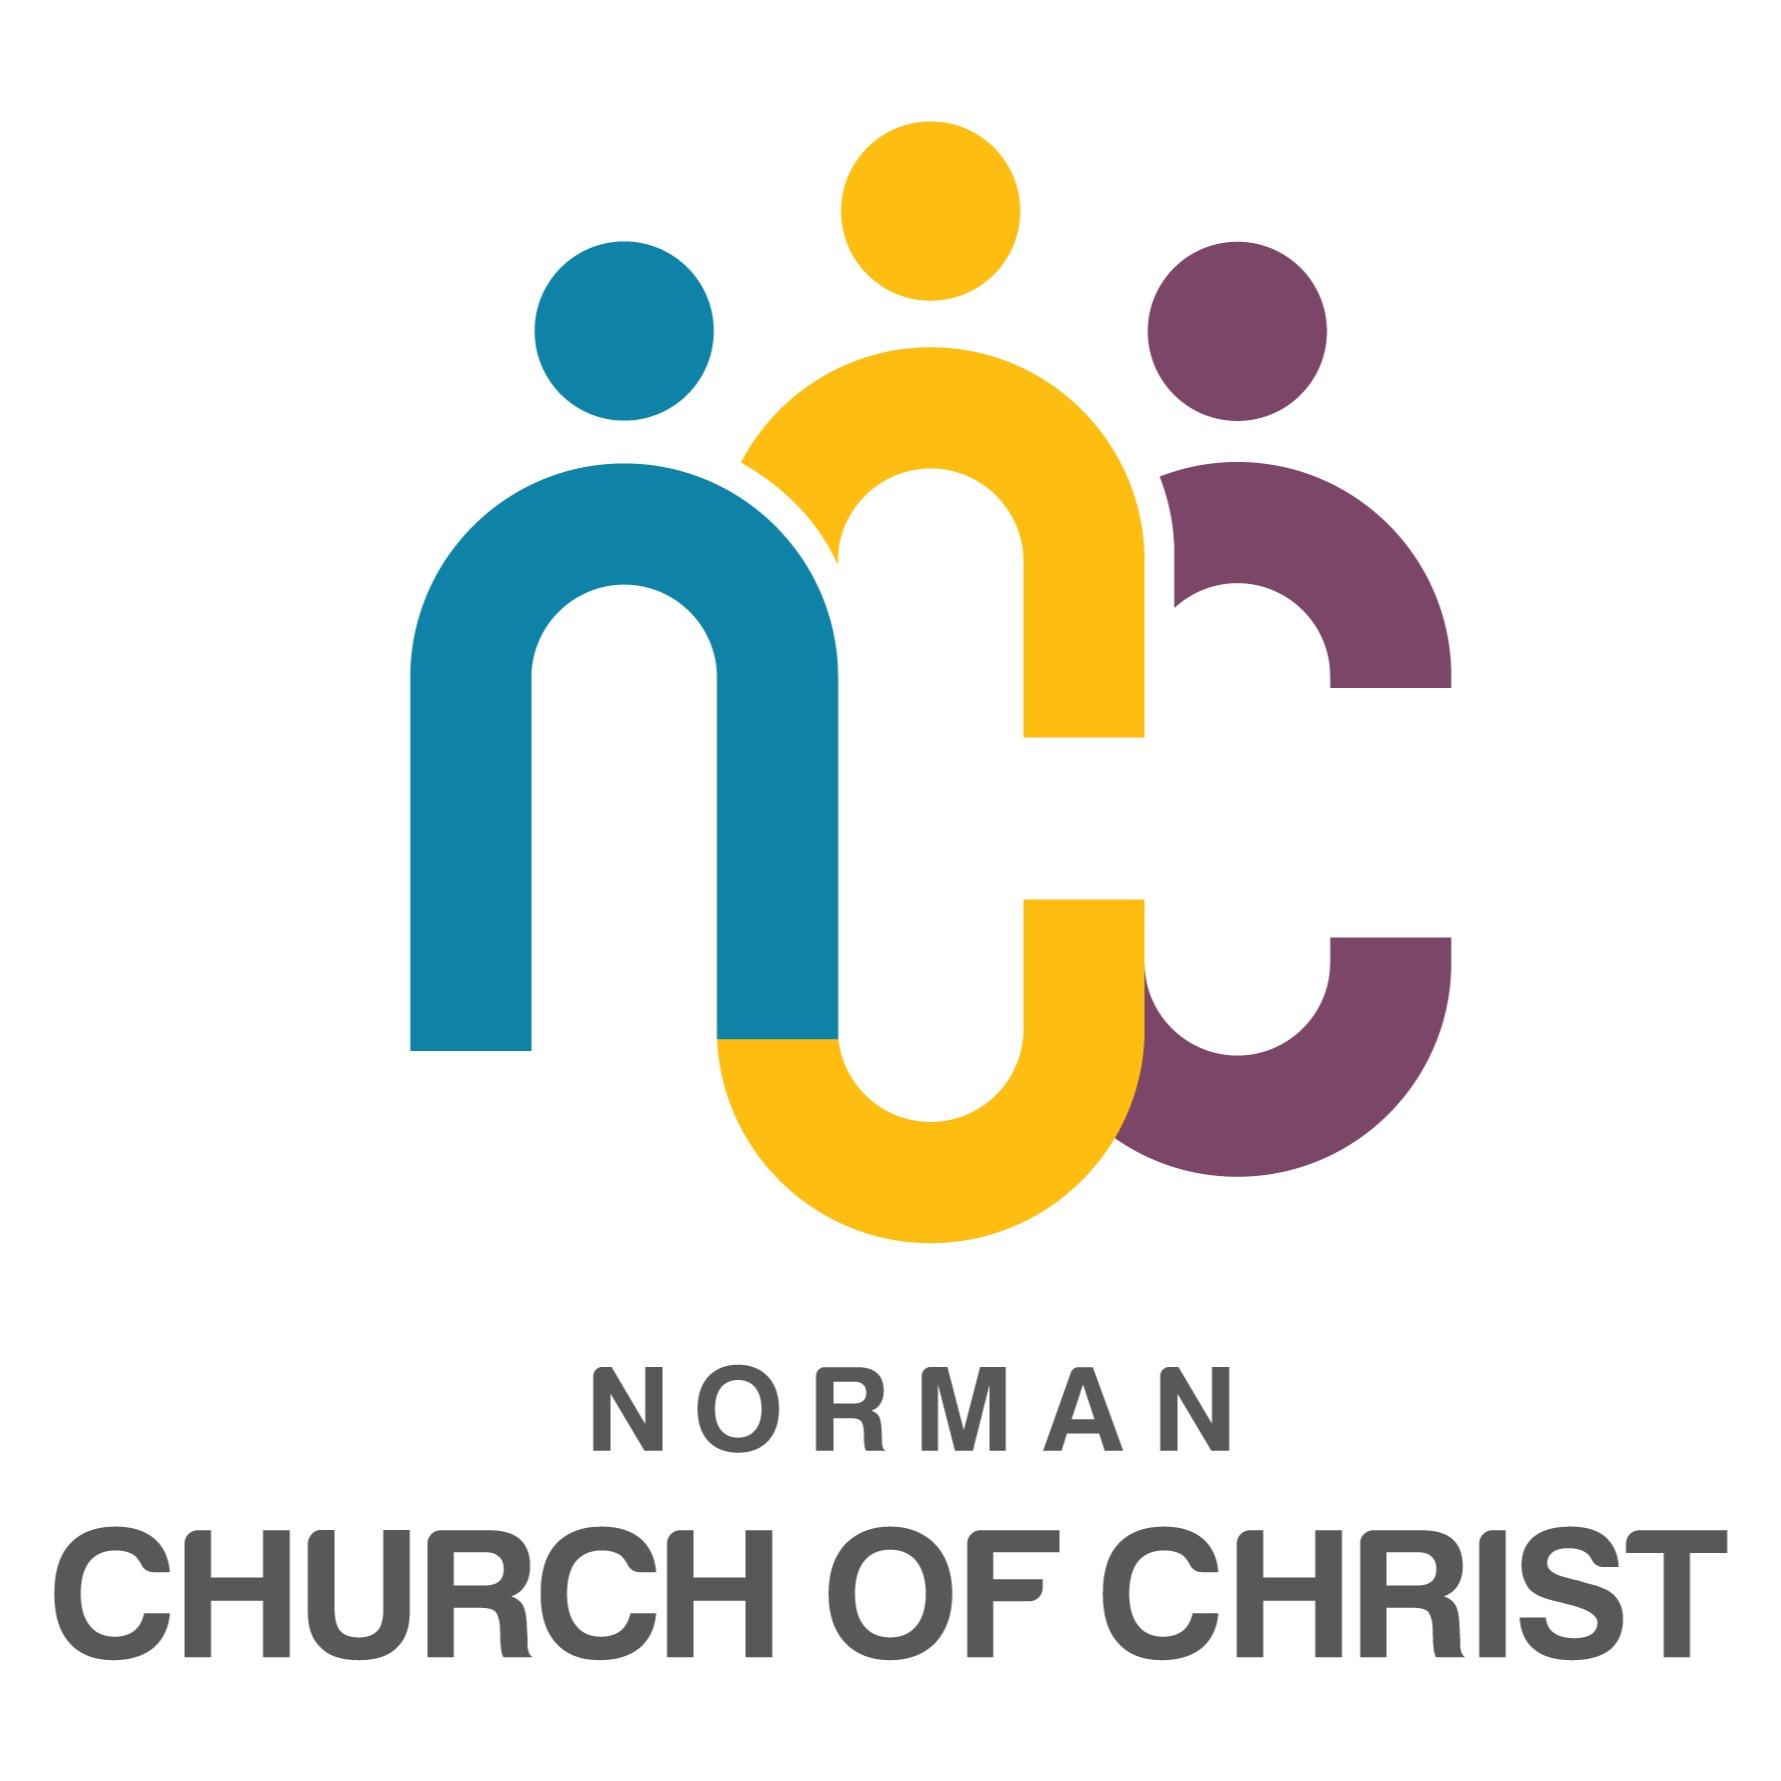 Norman Church of Christ